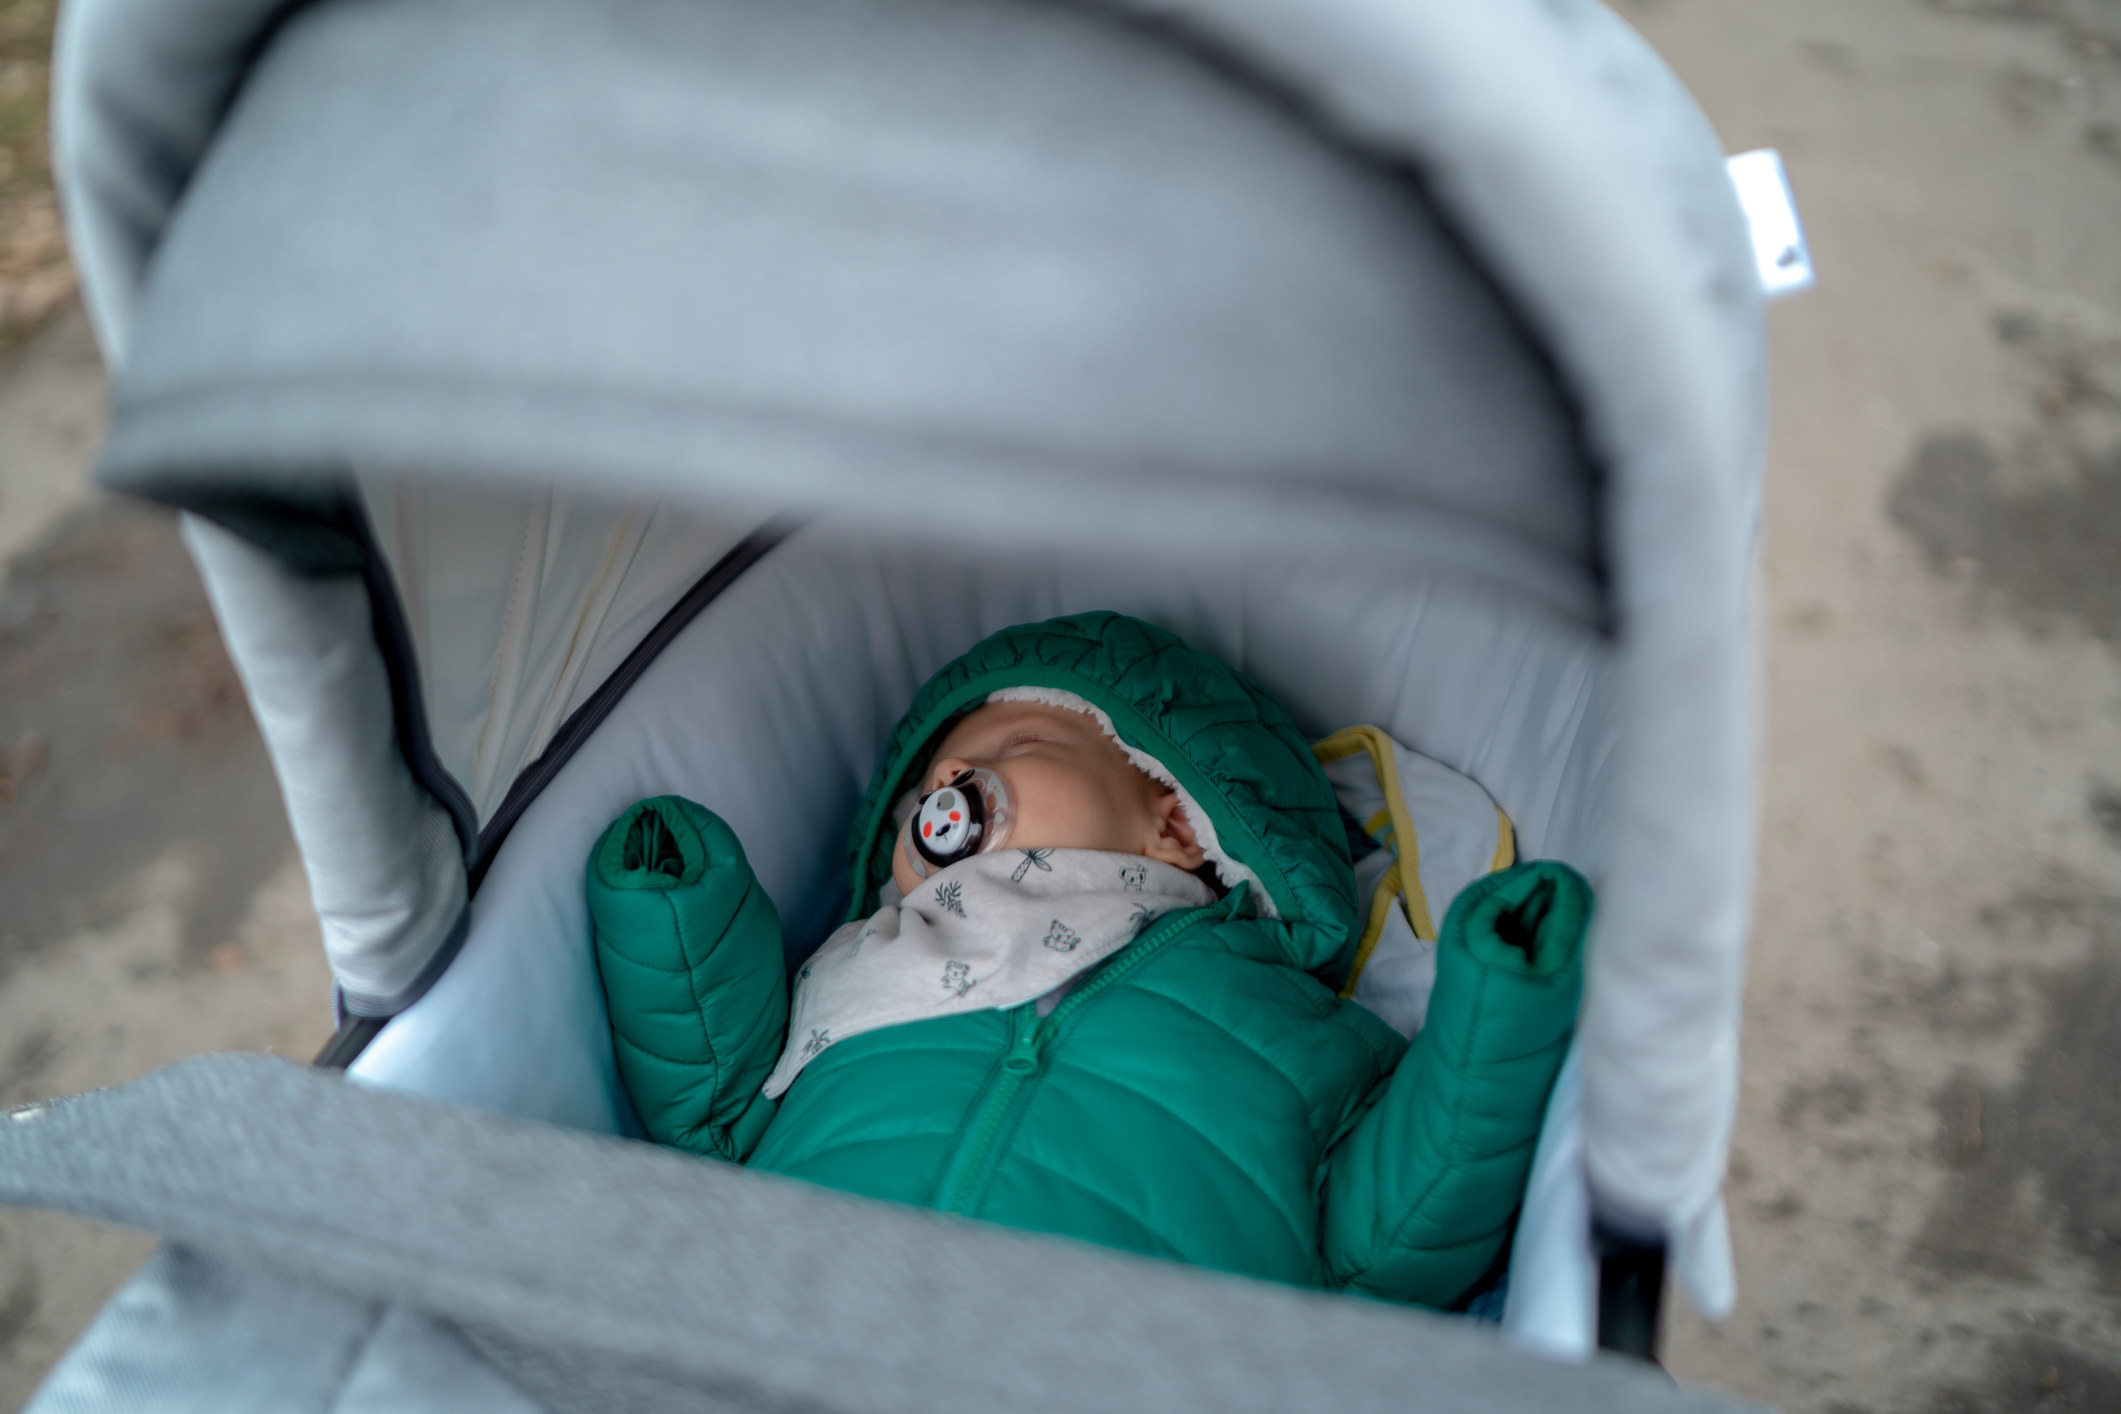 A baby sleeping in a stroller.